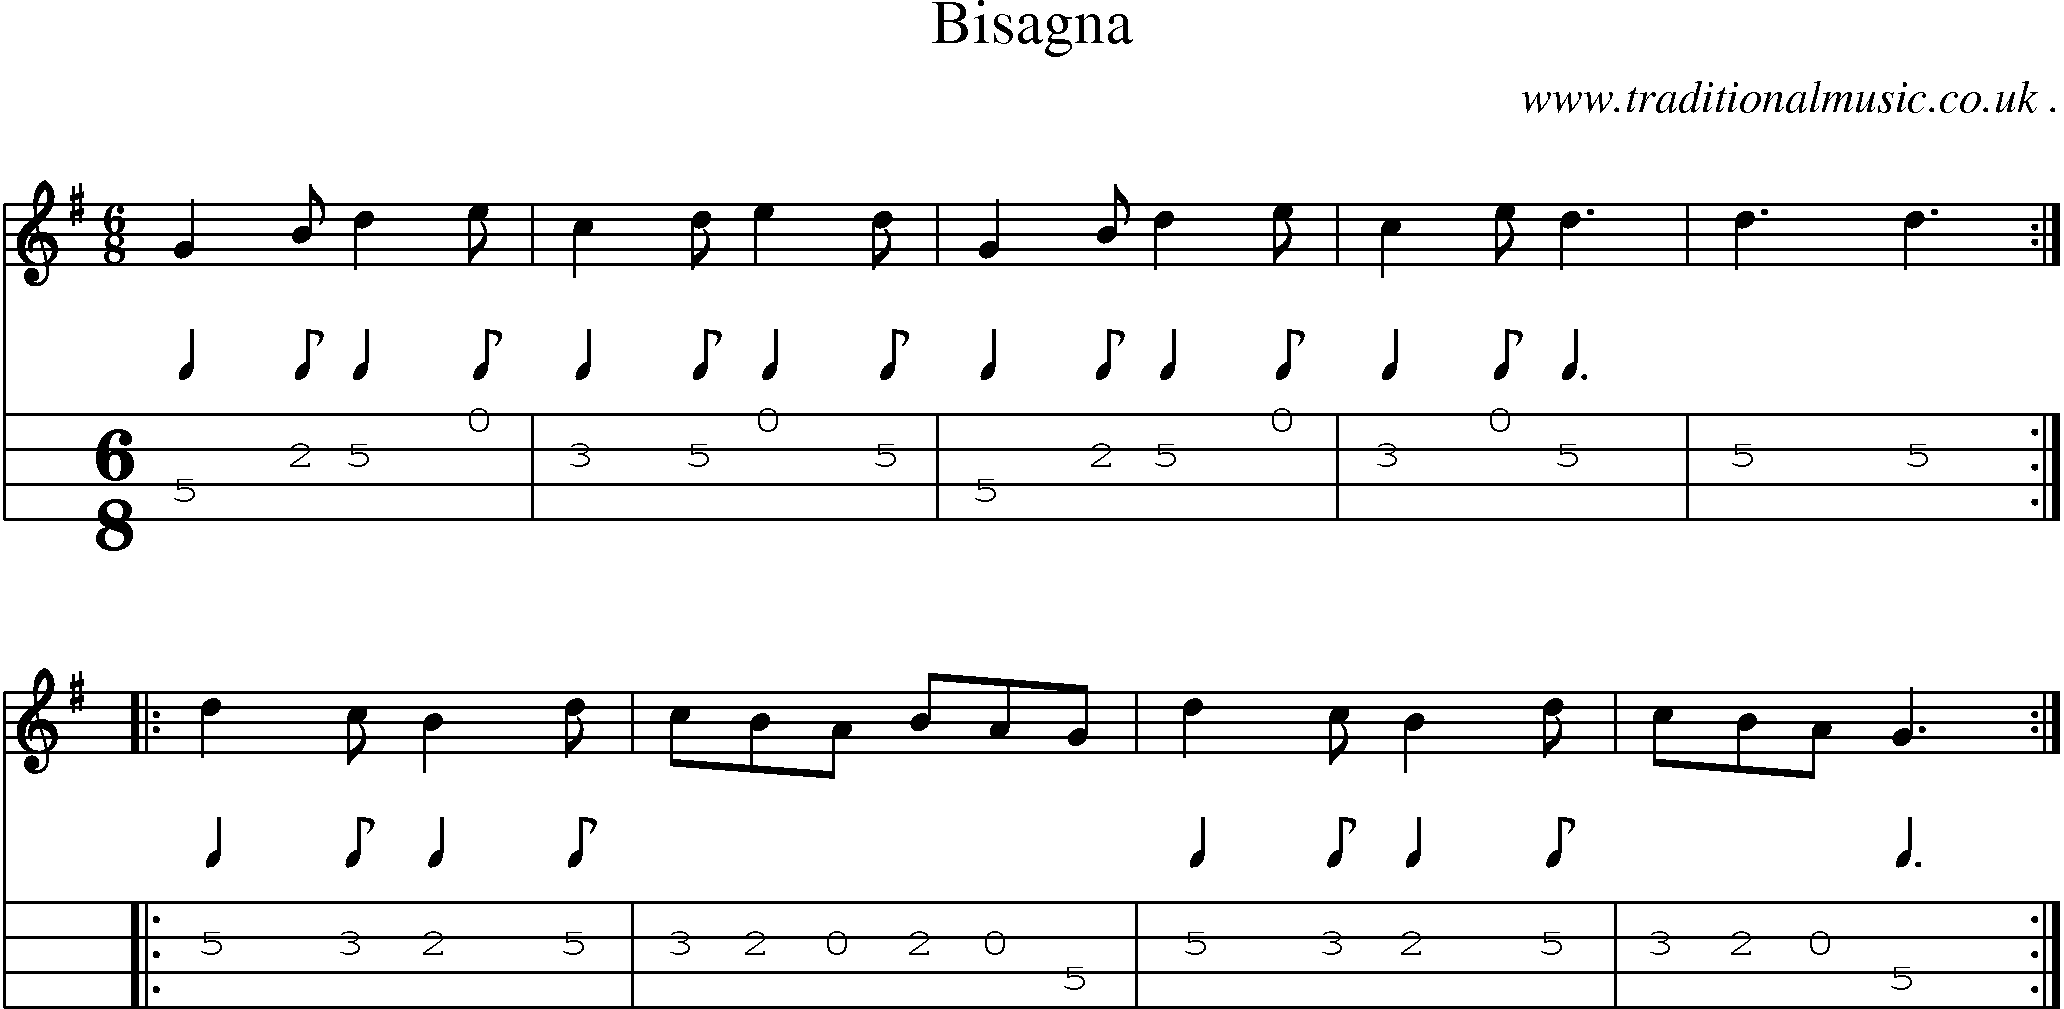 Sheet-Music and Mandolin Tabs for Bisagna